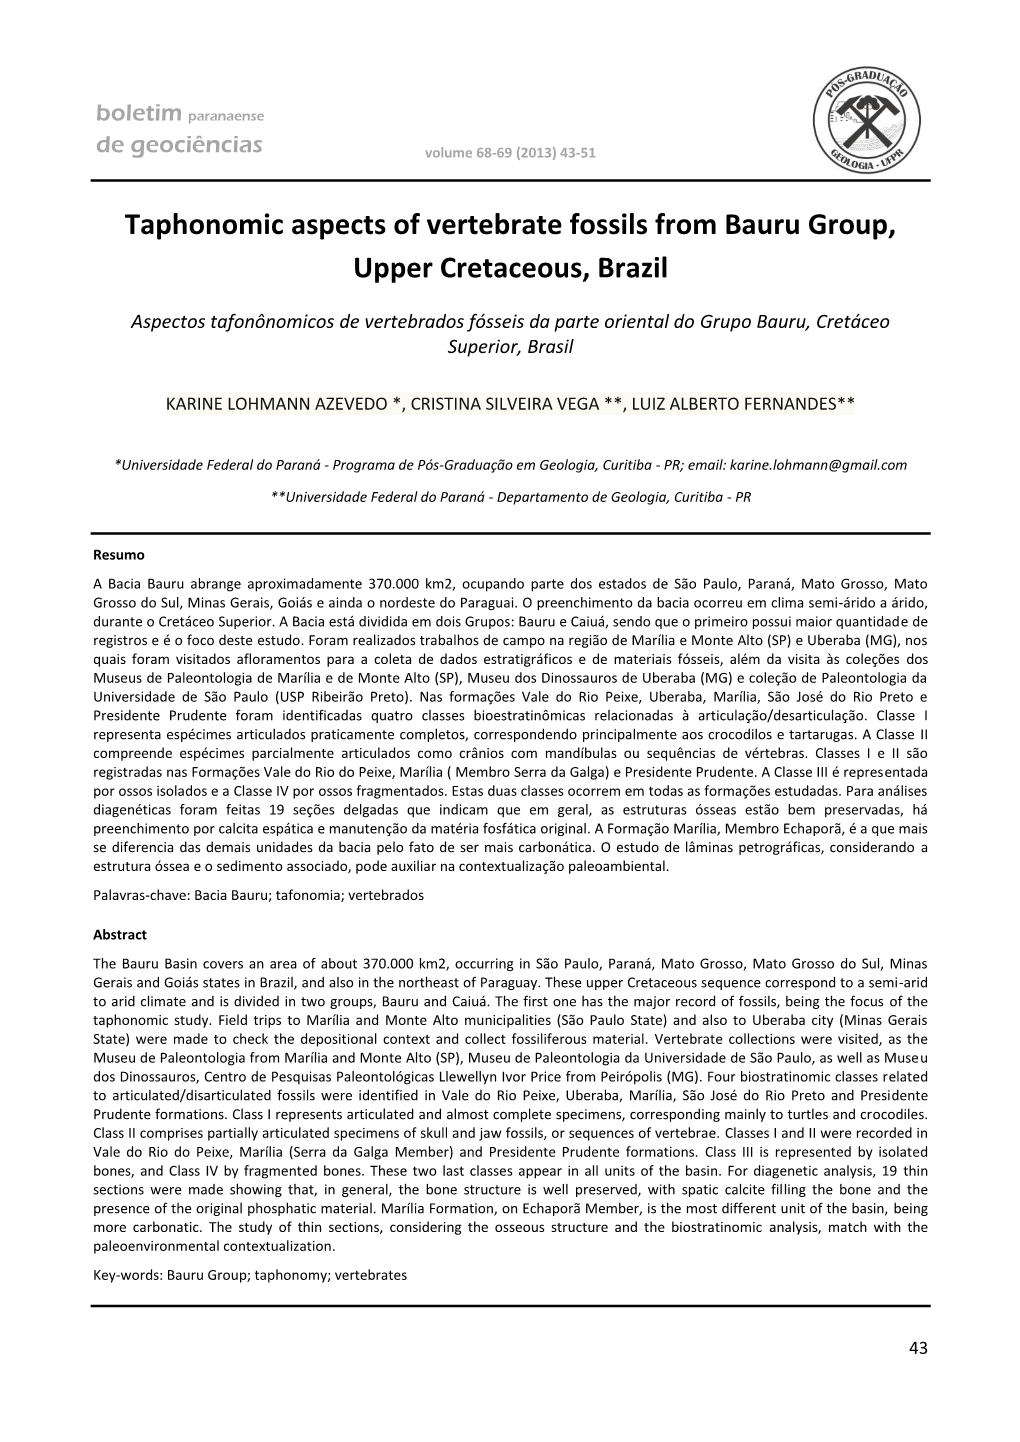 Taphonomic Aspects of Vertebrate Fossils from Bauru Group, Upper Cretaceous, Brazil